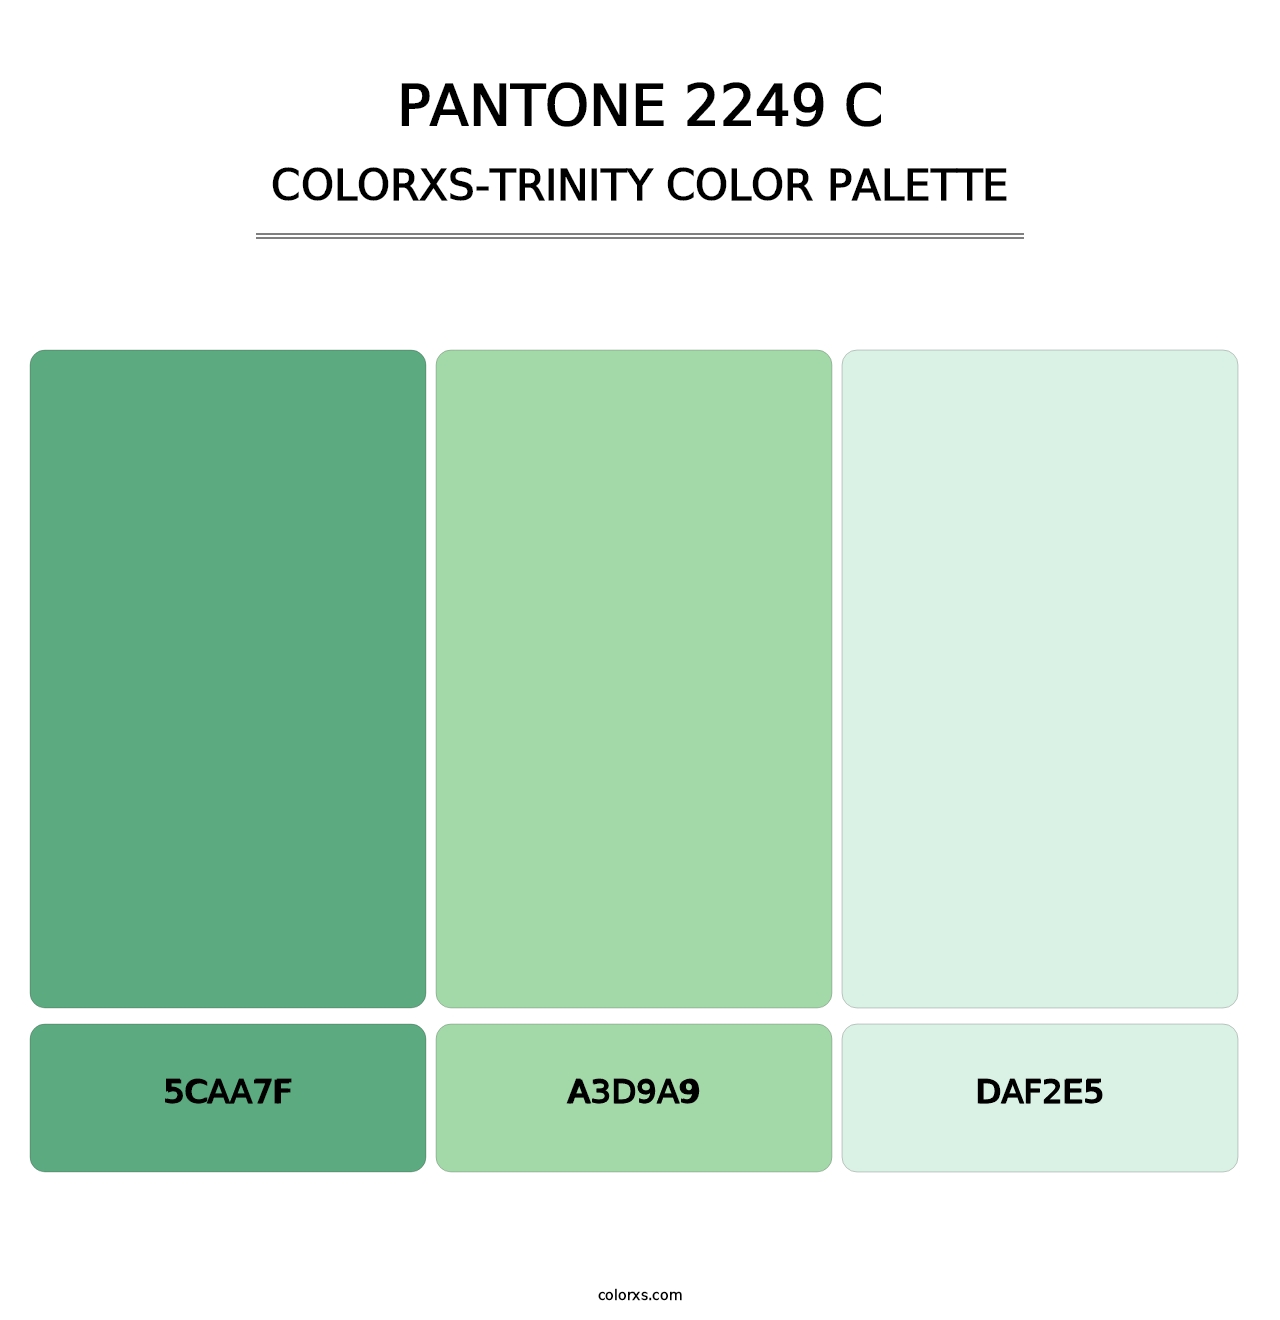 PANTONE 2249 C - Colorxs Trinity Palette